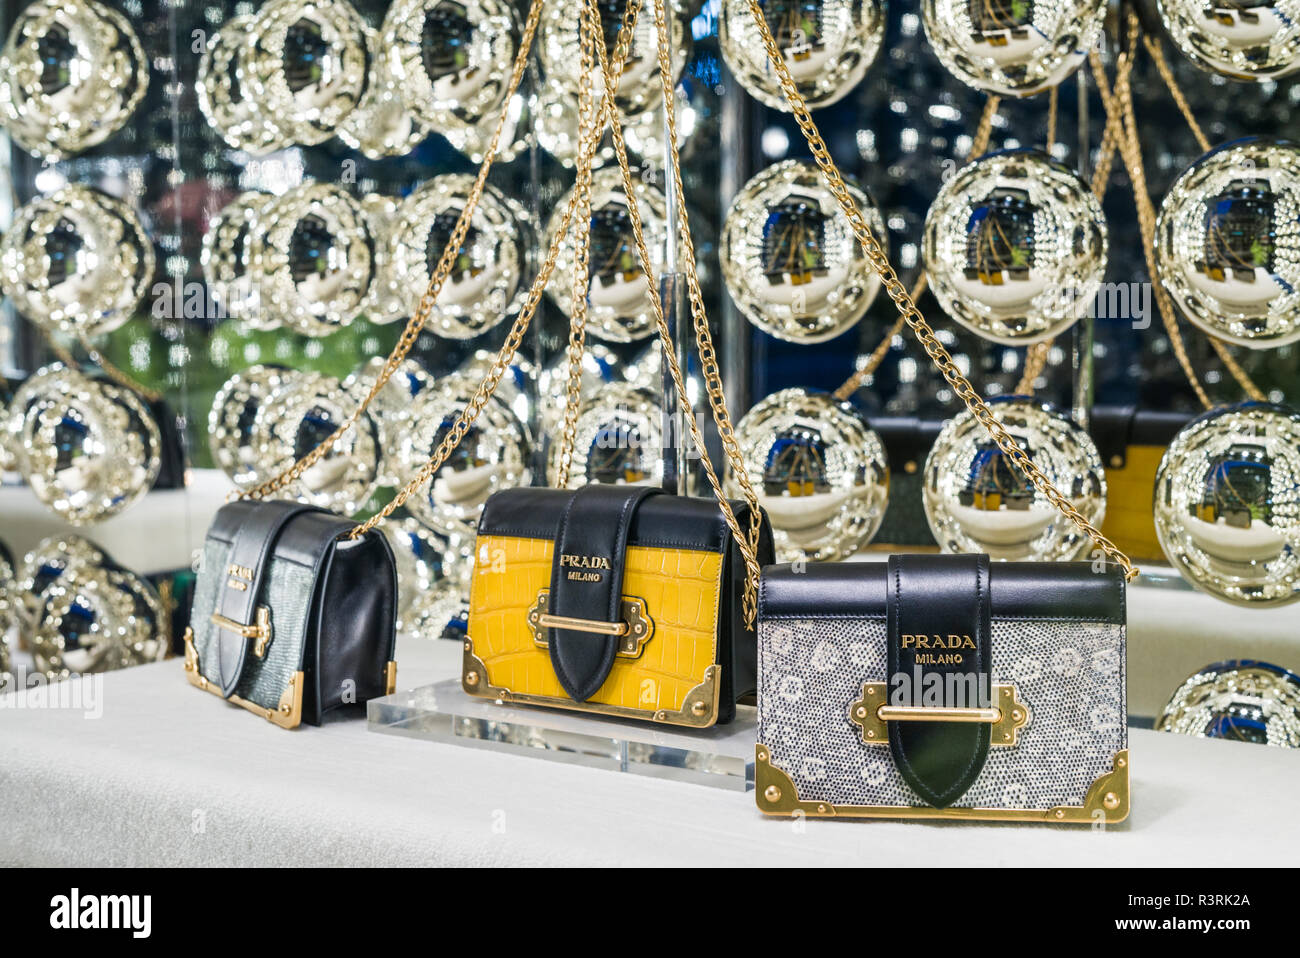 Prada Handbags High Resolution Stock Photography and Images - Alamy